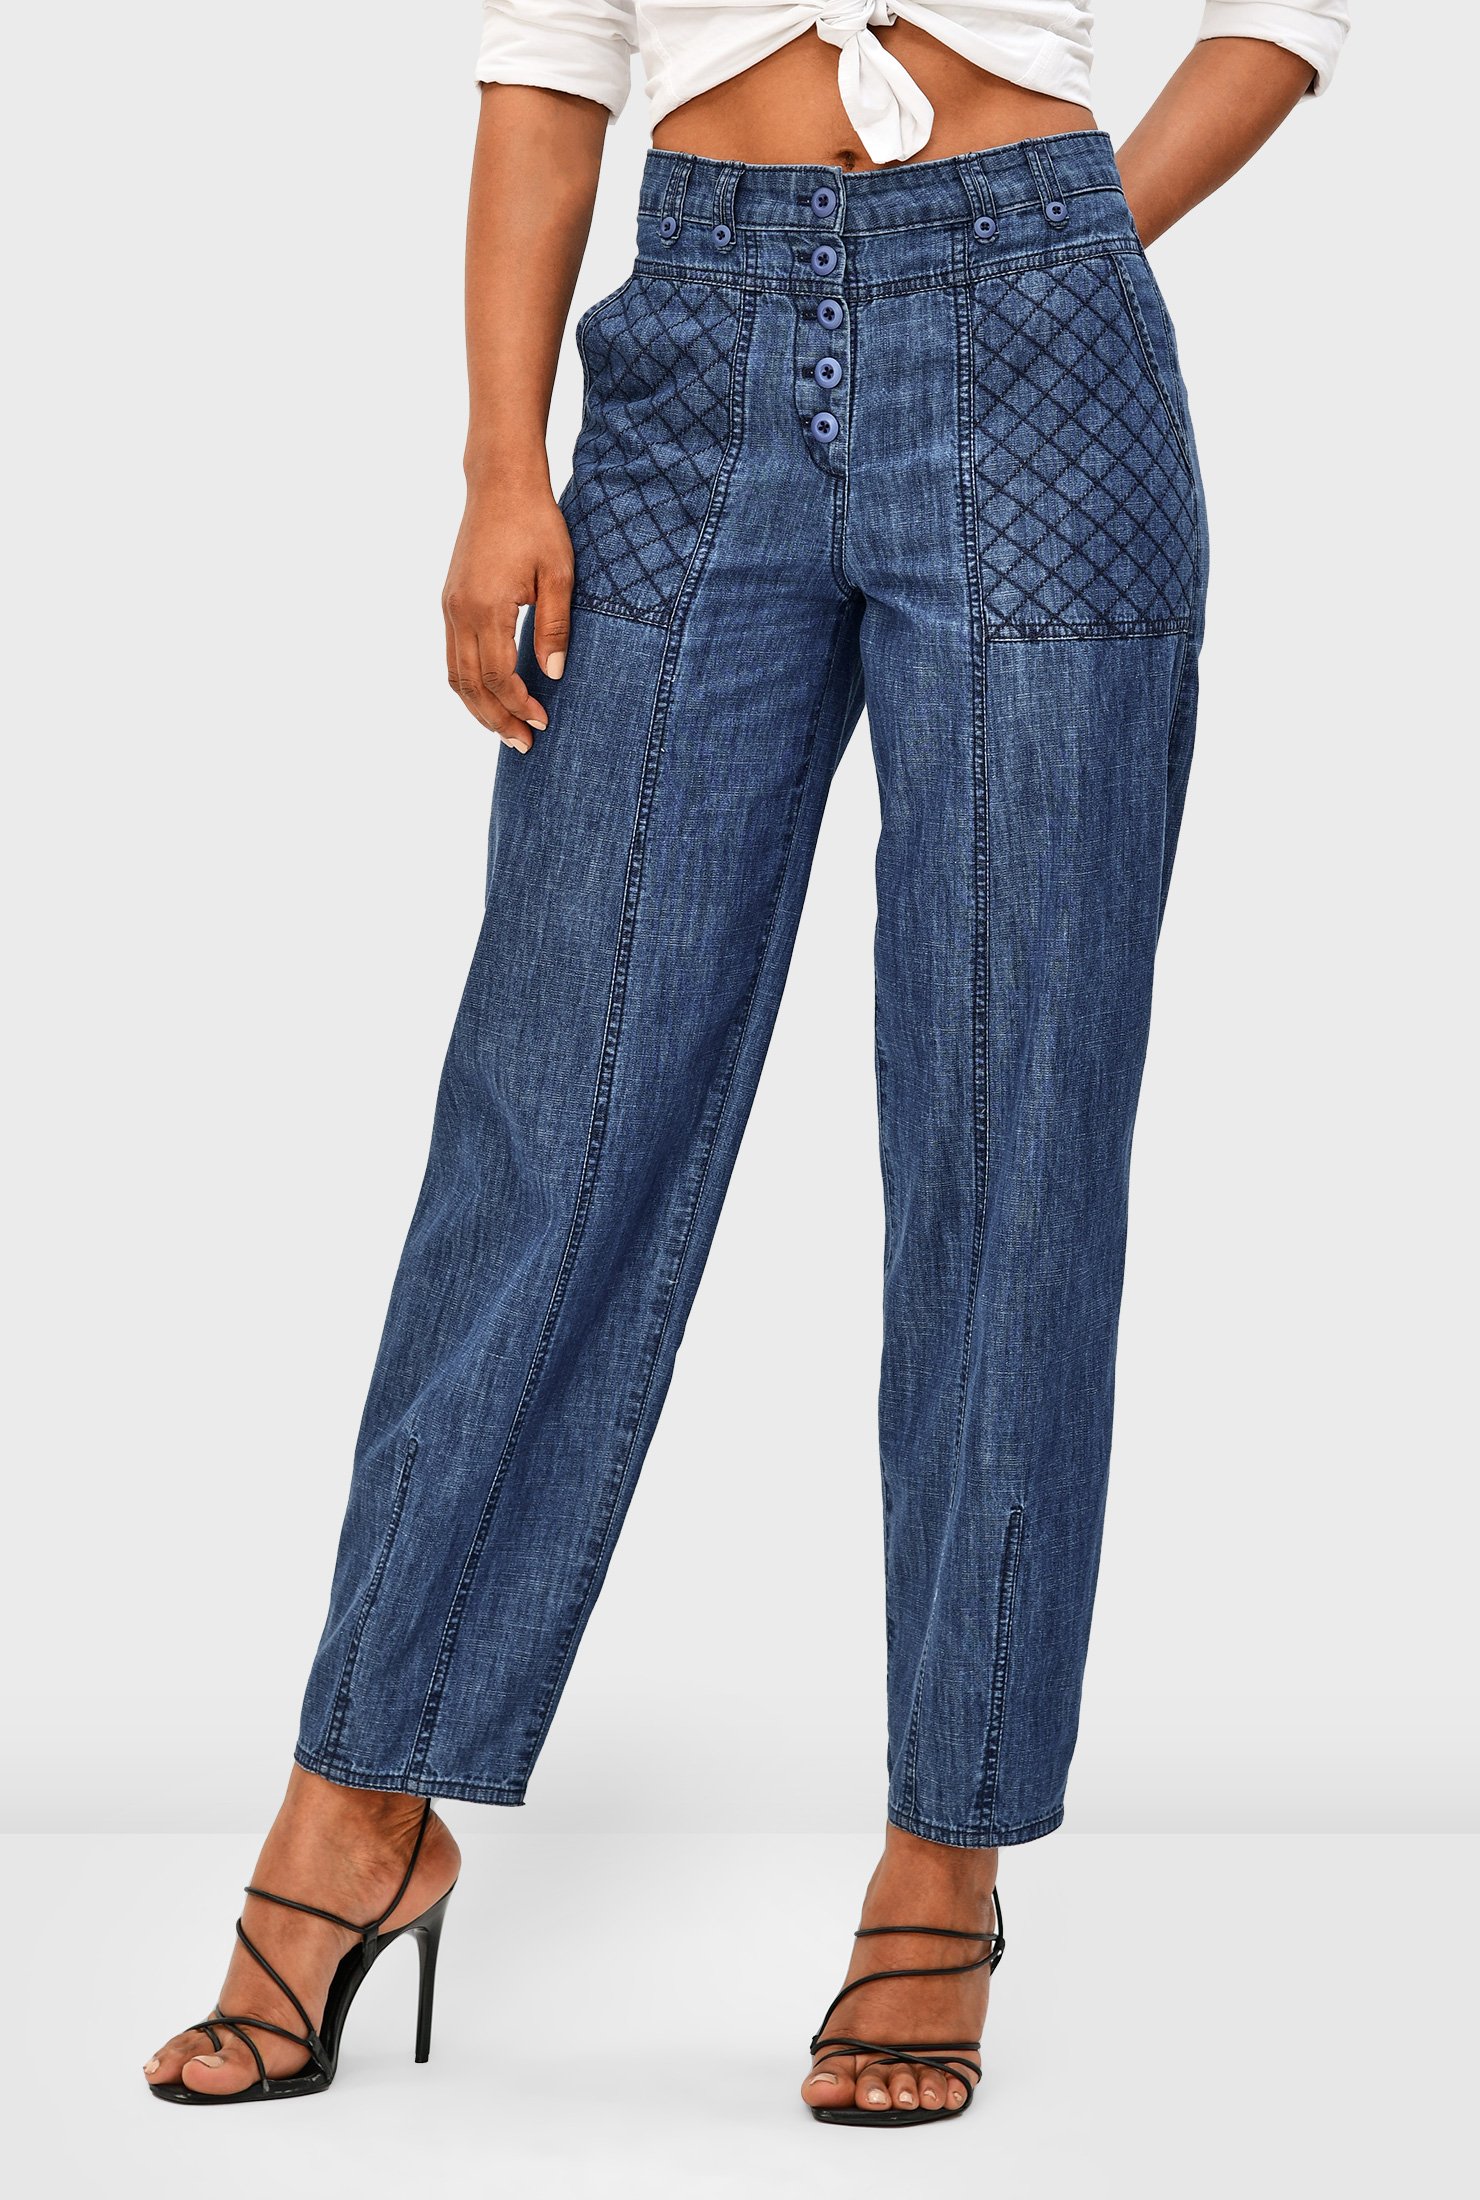 Shop Button fly high | jeans cotton denim waist eShakti